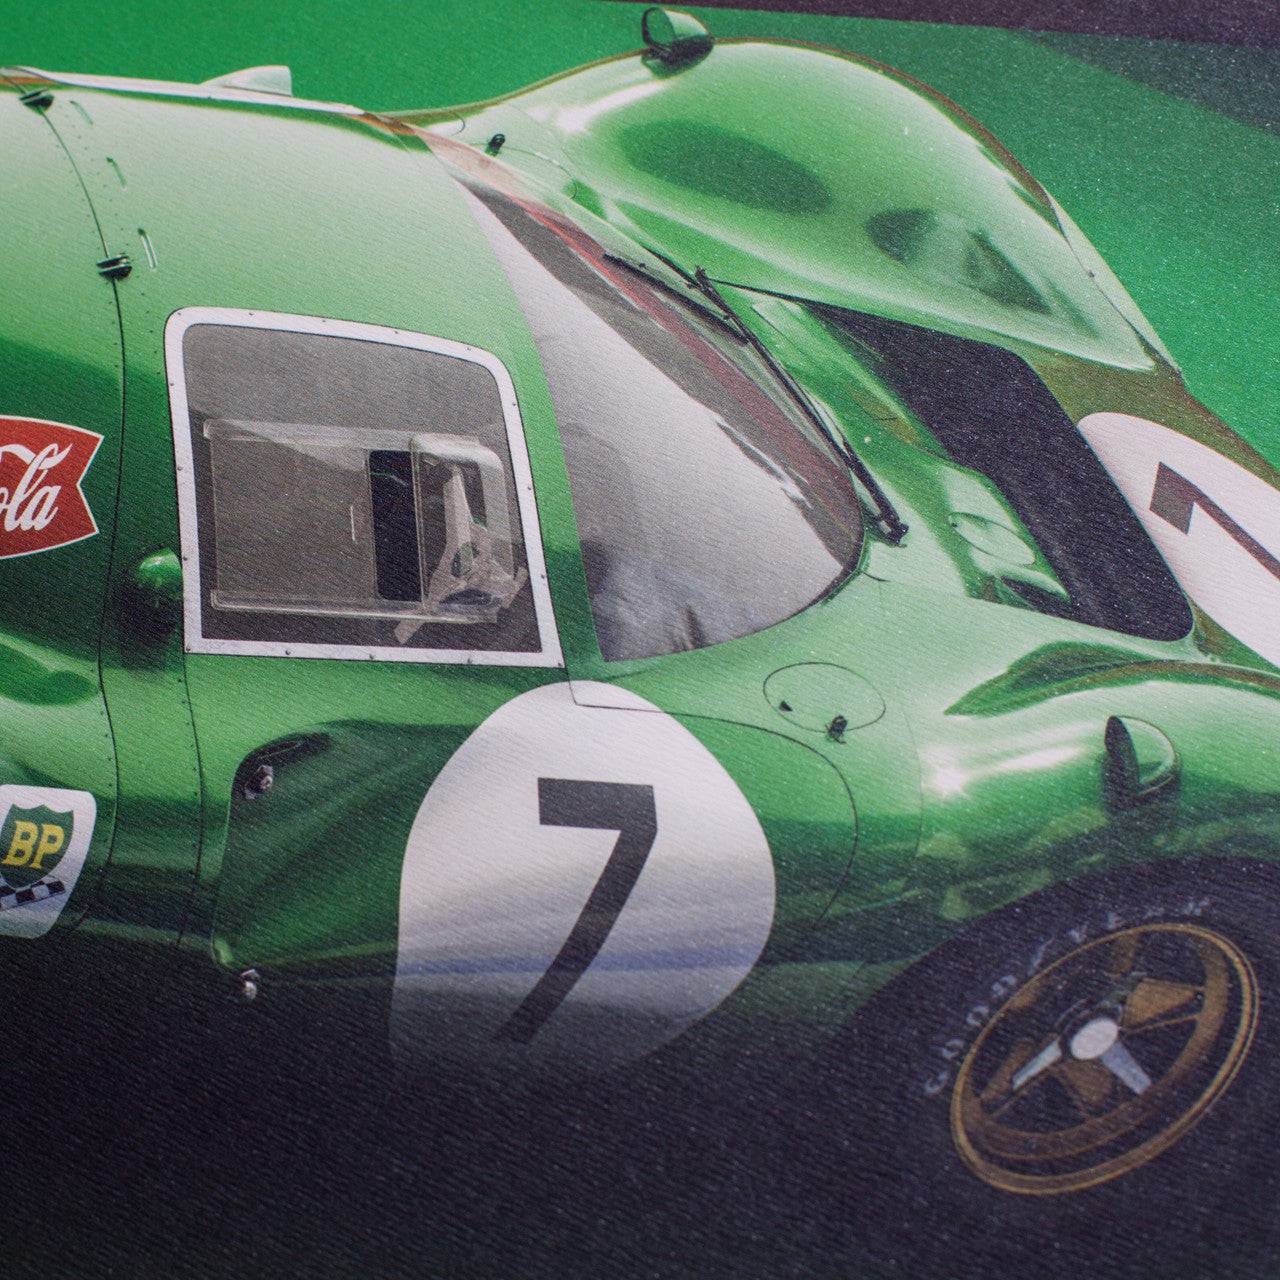 Ferrari 412P - Green - Kyalami 9 Hour - 1967 - Limited Poster